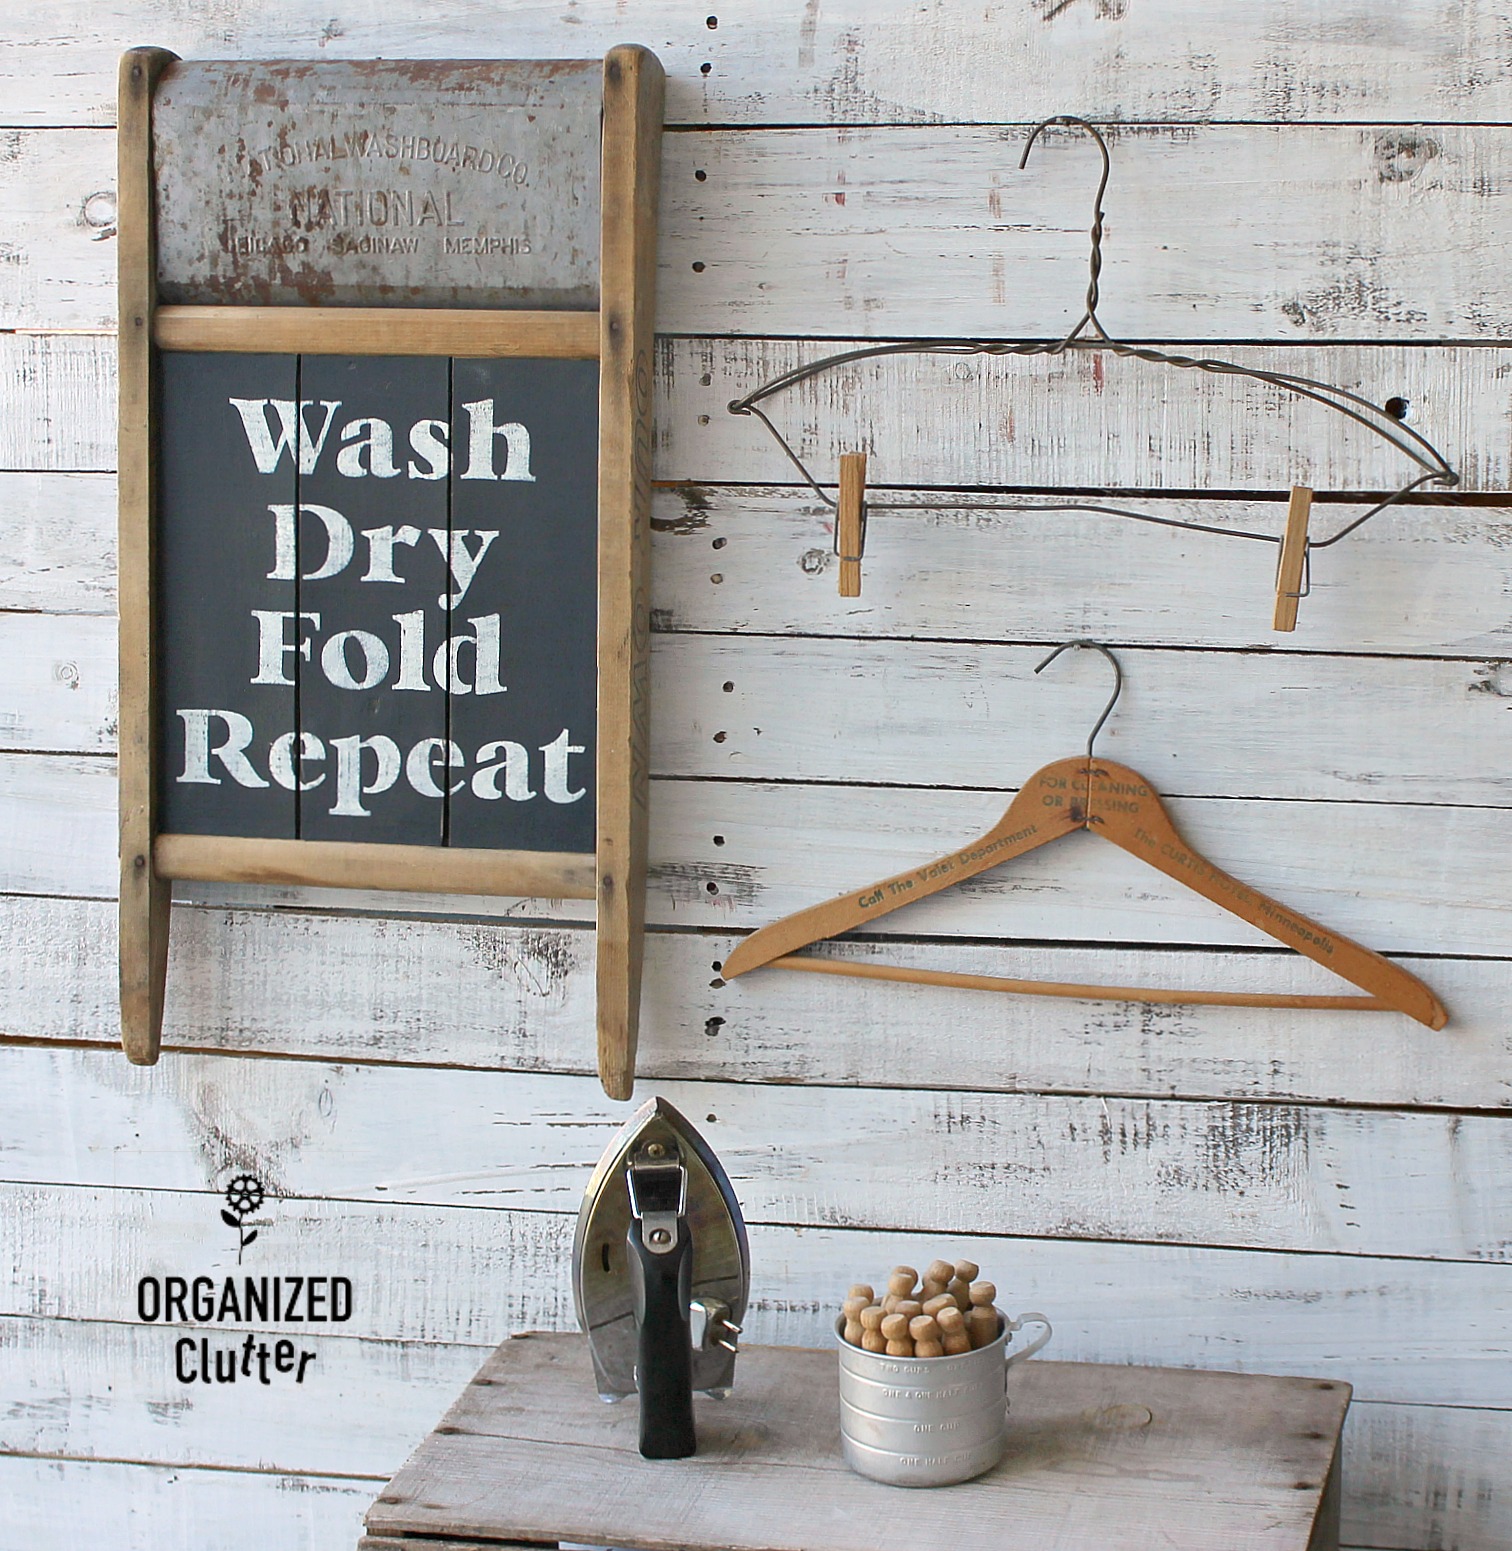 Hand Washboard for Laundry Washing Clothes, Wood Scrub Board, Rustic Old Fashioned Washboard, Wash Board for Hand Washing, Washboard Laundry Board